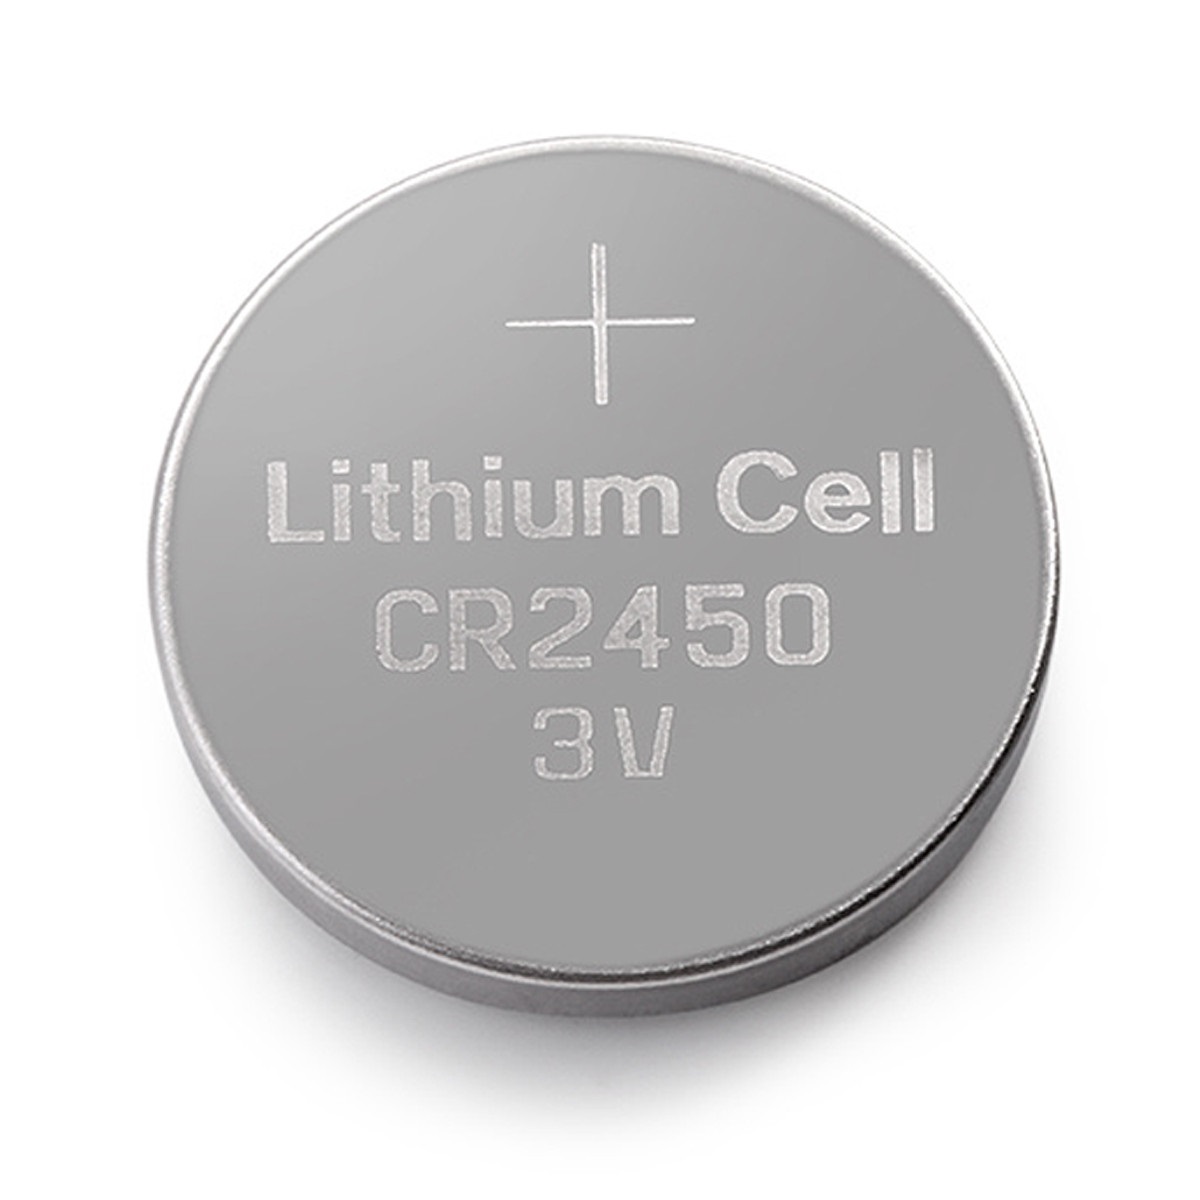 Bateria CR2450 3v Lithium  - Riberpack